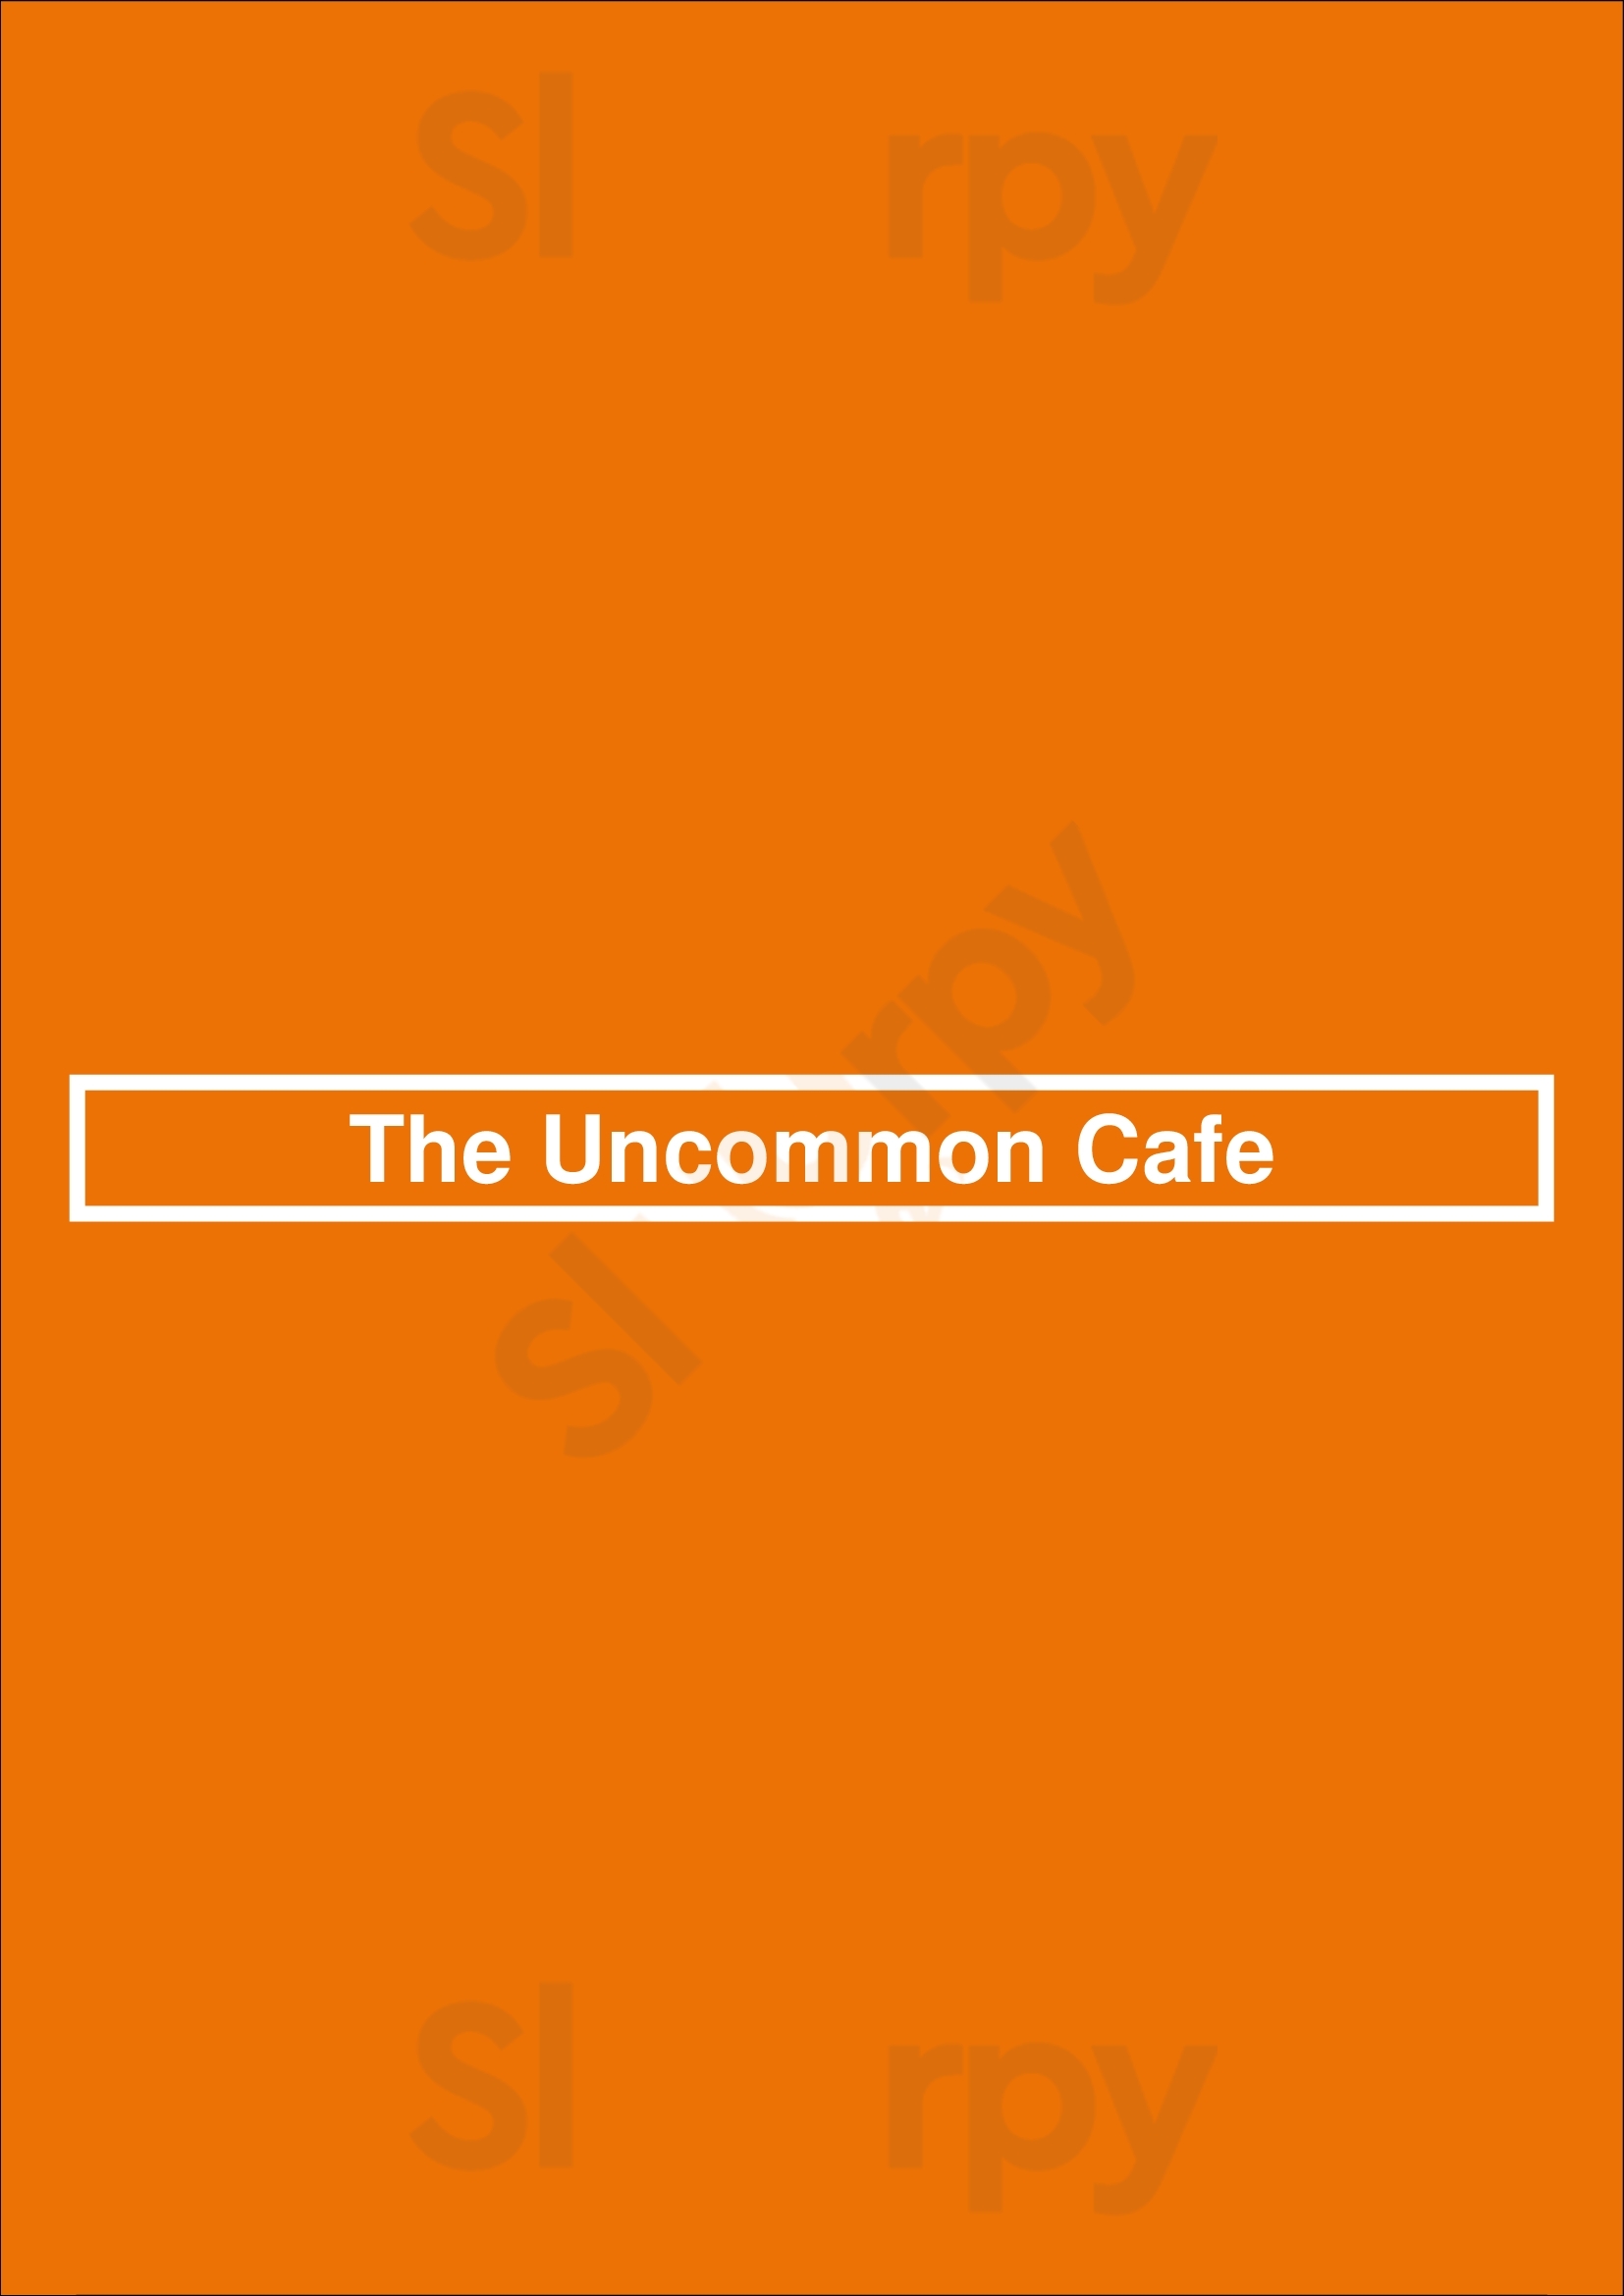 The Uncommon Cafe Vancouver Menu - 1